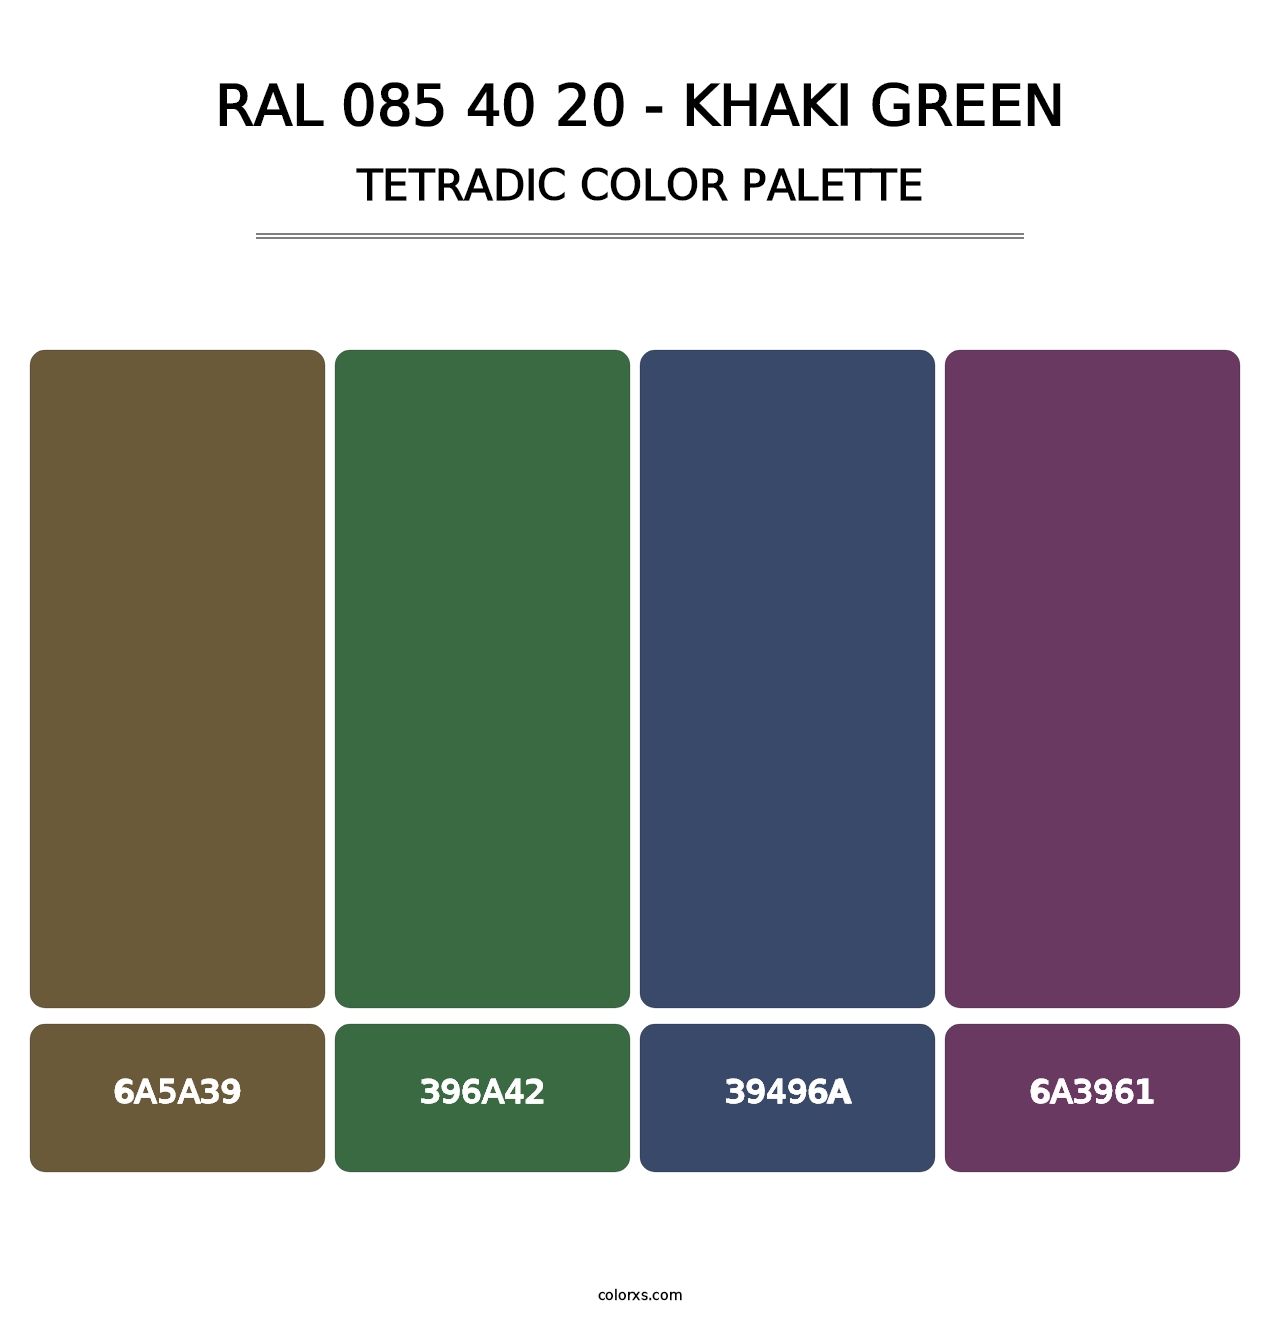 RAL 085 40 20 - Khaki Green - Tetradic Color Palette